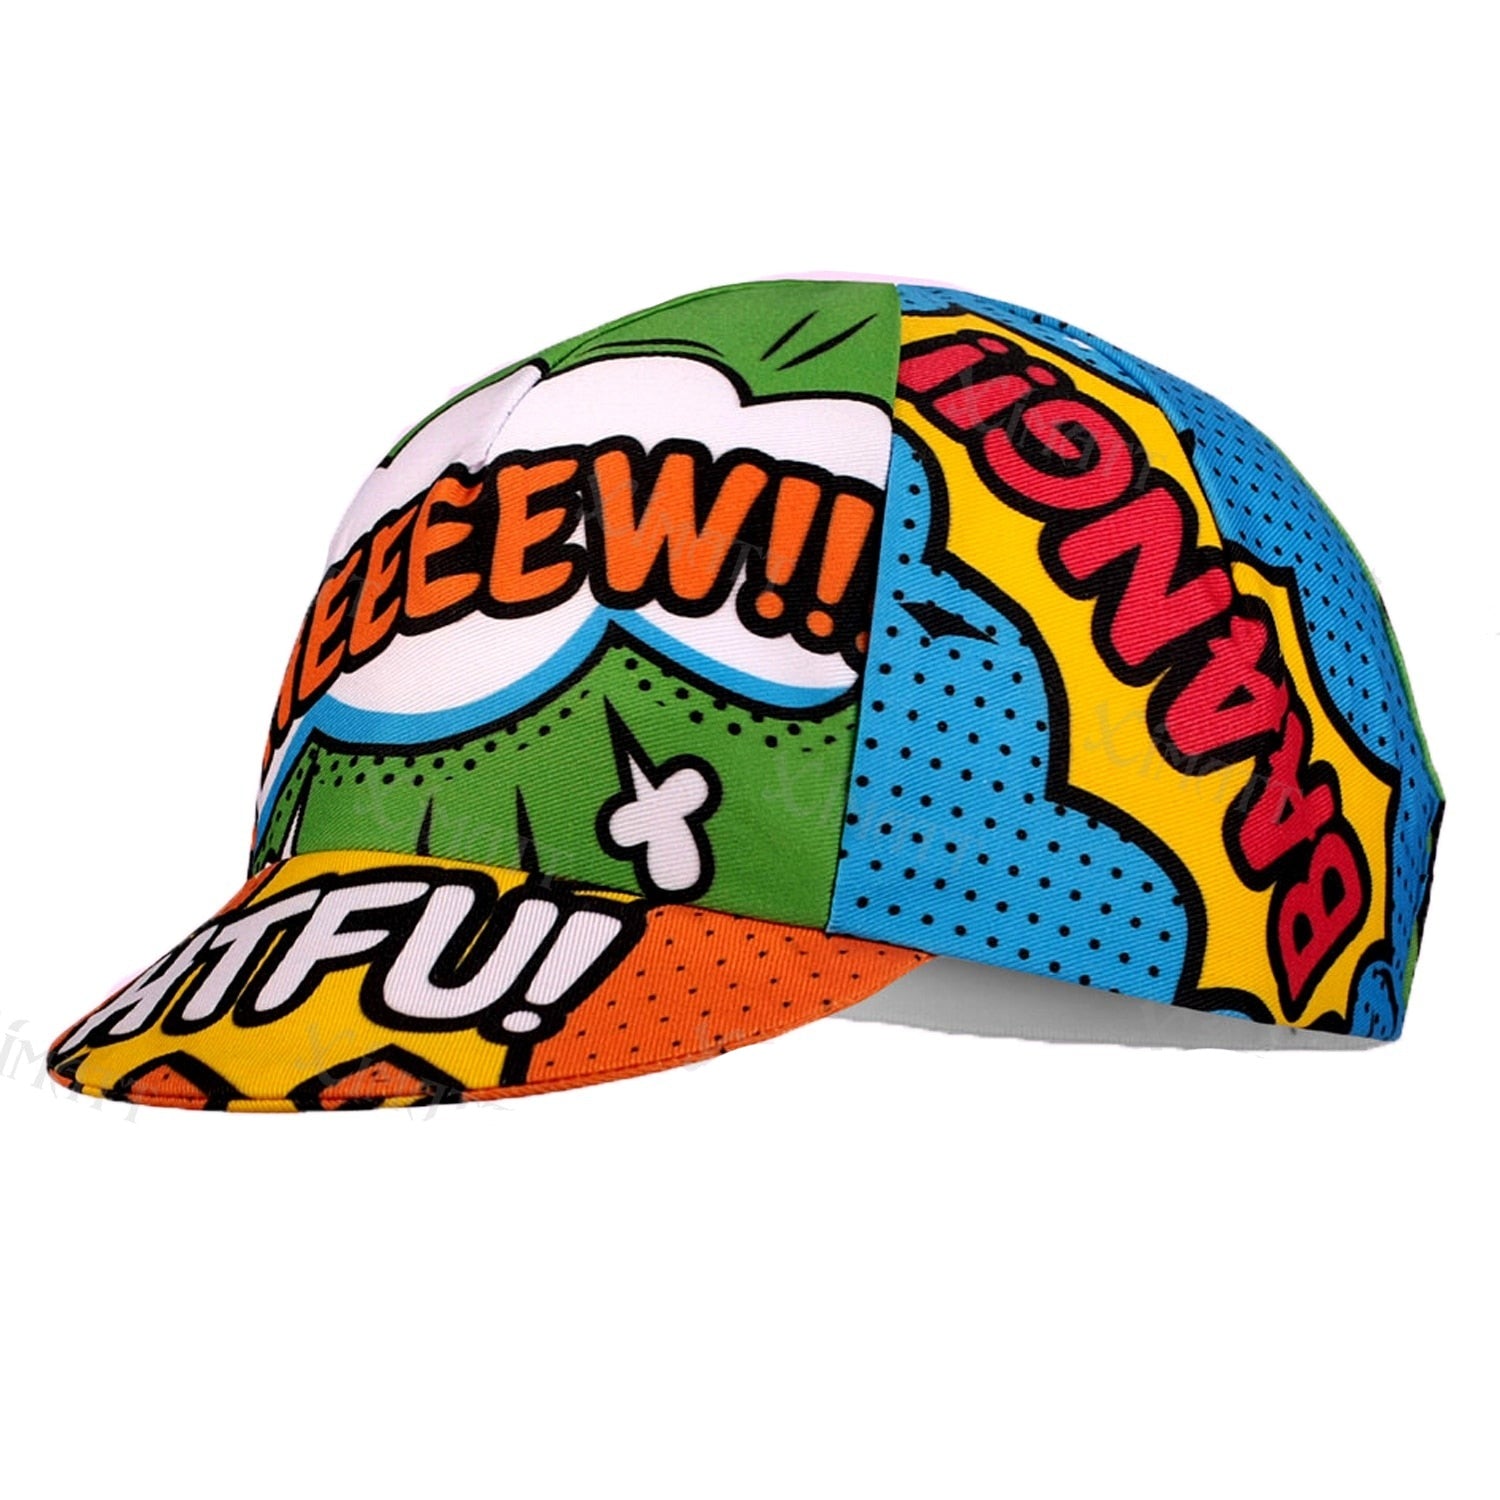 Global Wushu Cartoon Cycling Cap Sports Quick Drying Polyester Fleece Optional Colorful Girl's Bicycle Hat